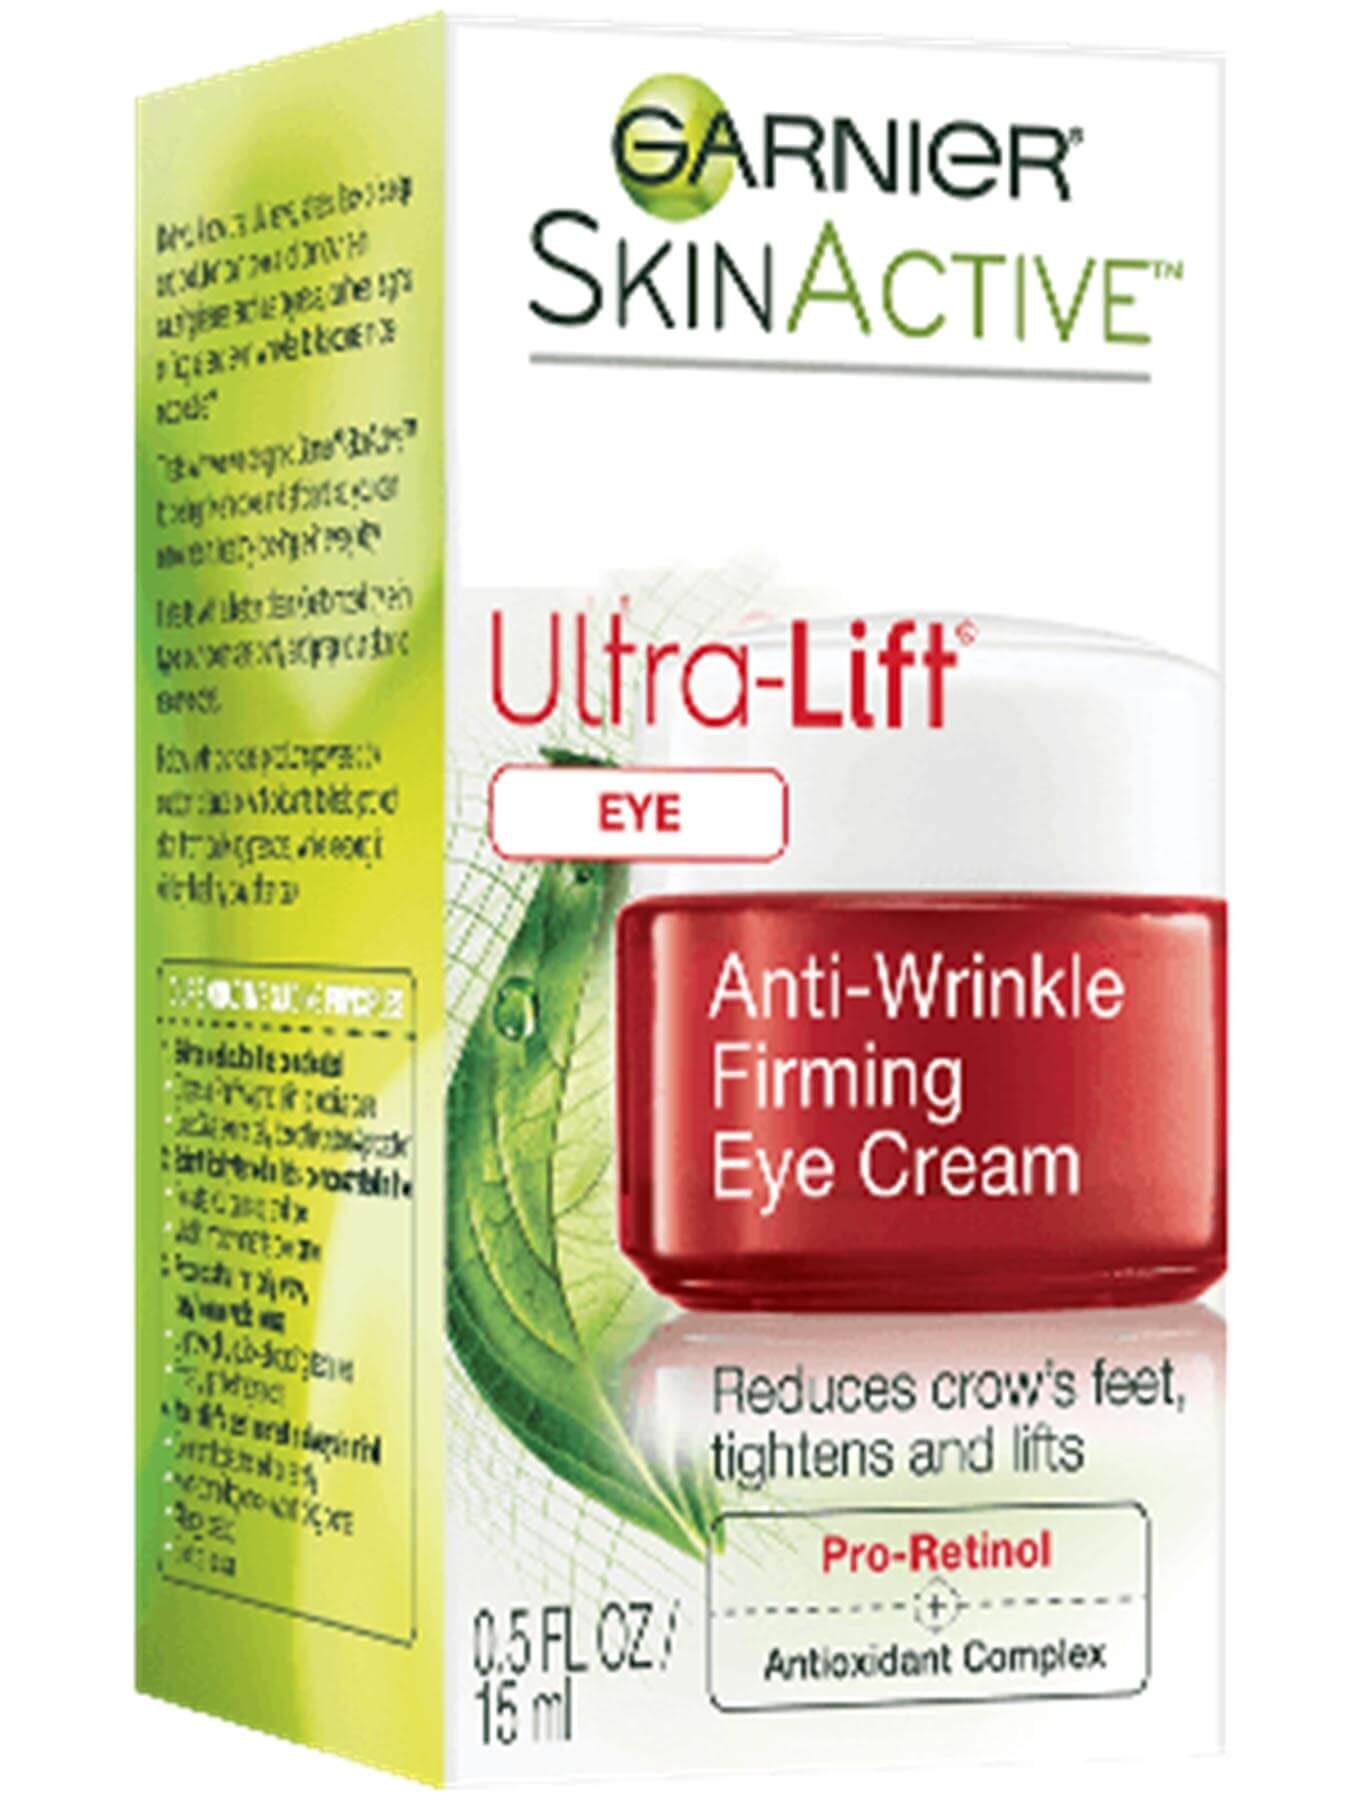 garnier skinactive ultra lift anti wrinkle eye cream skin care 2